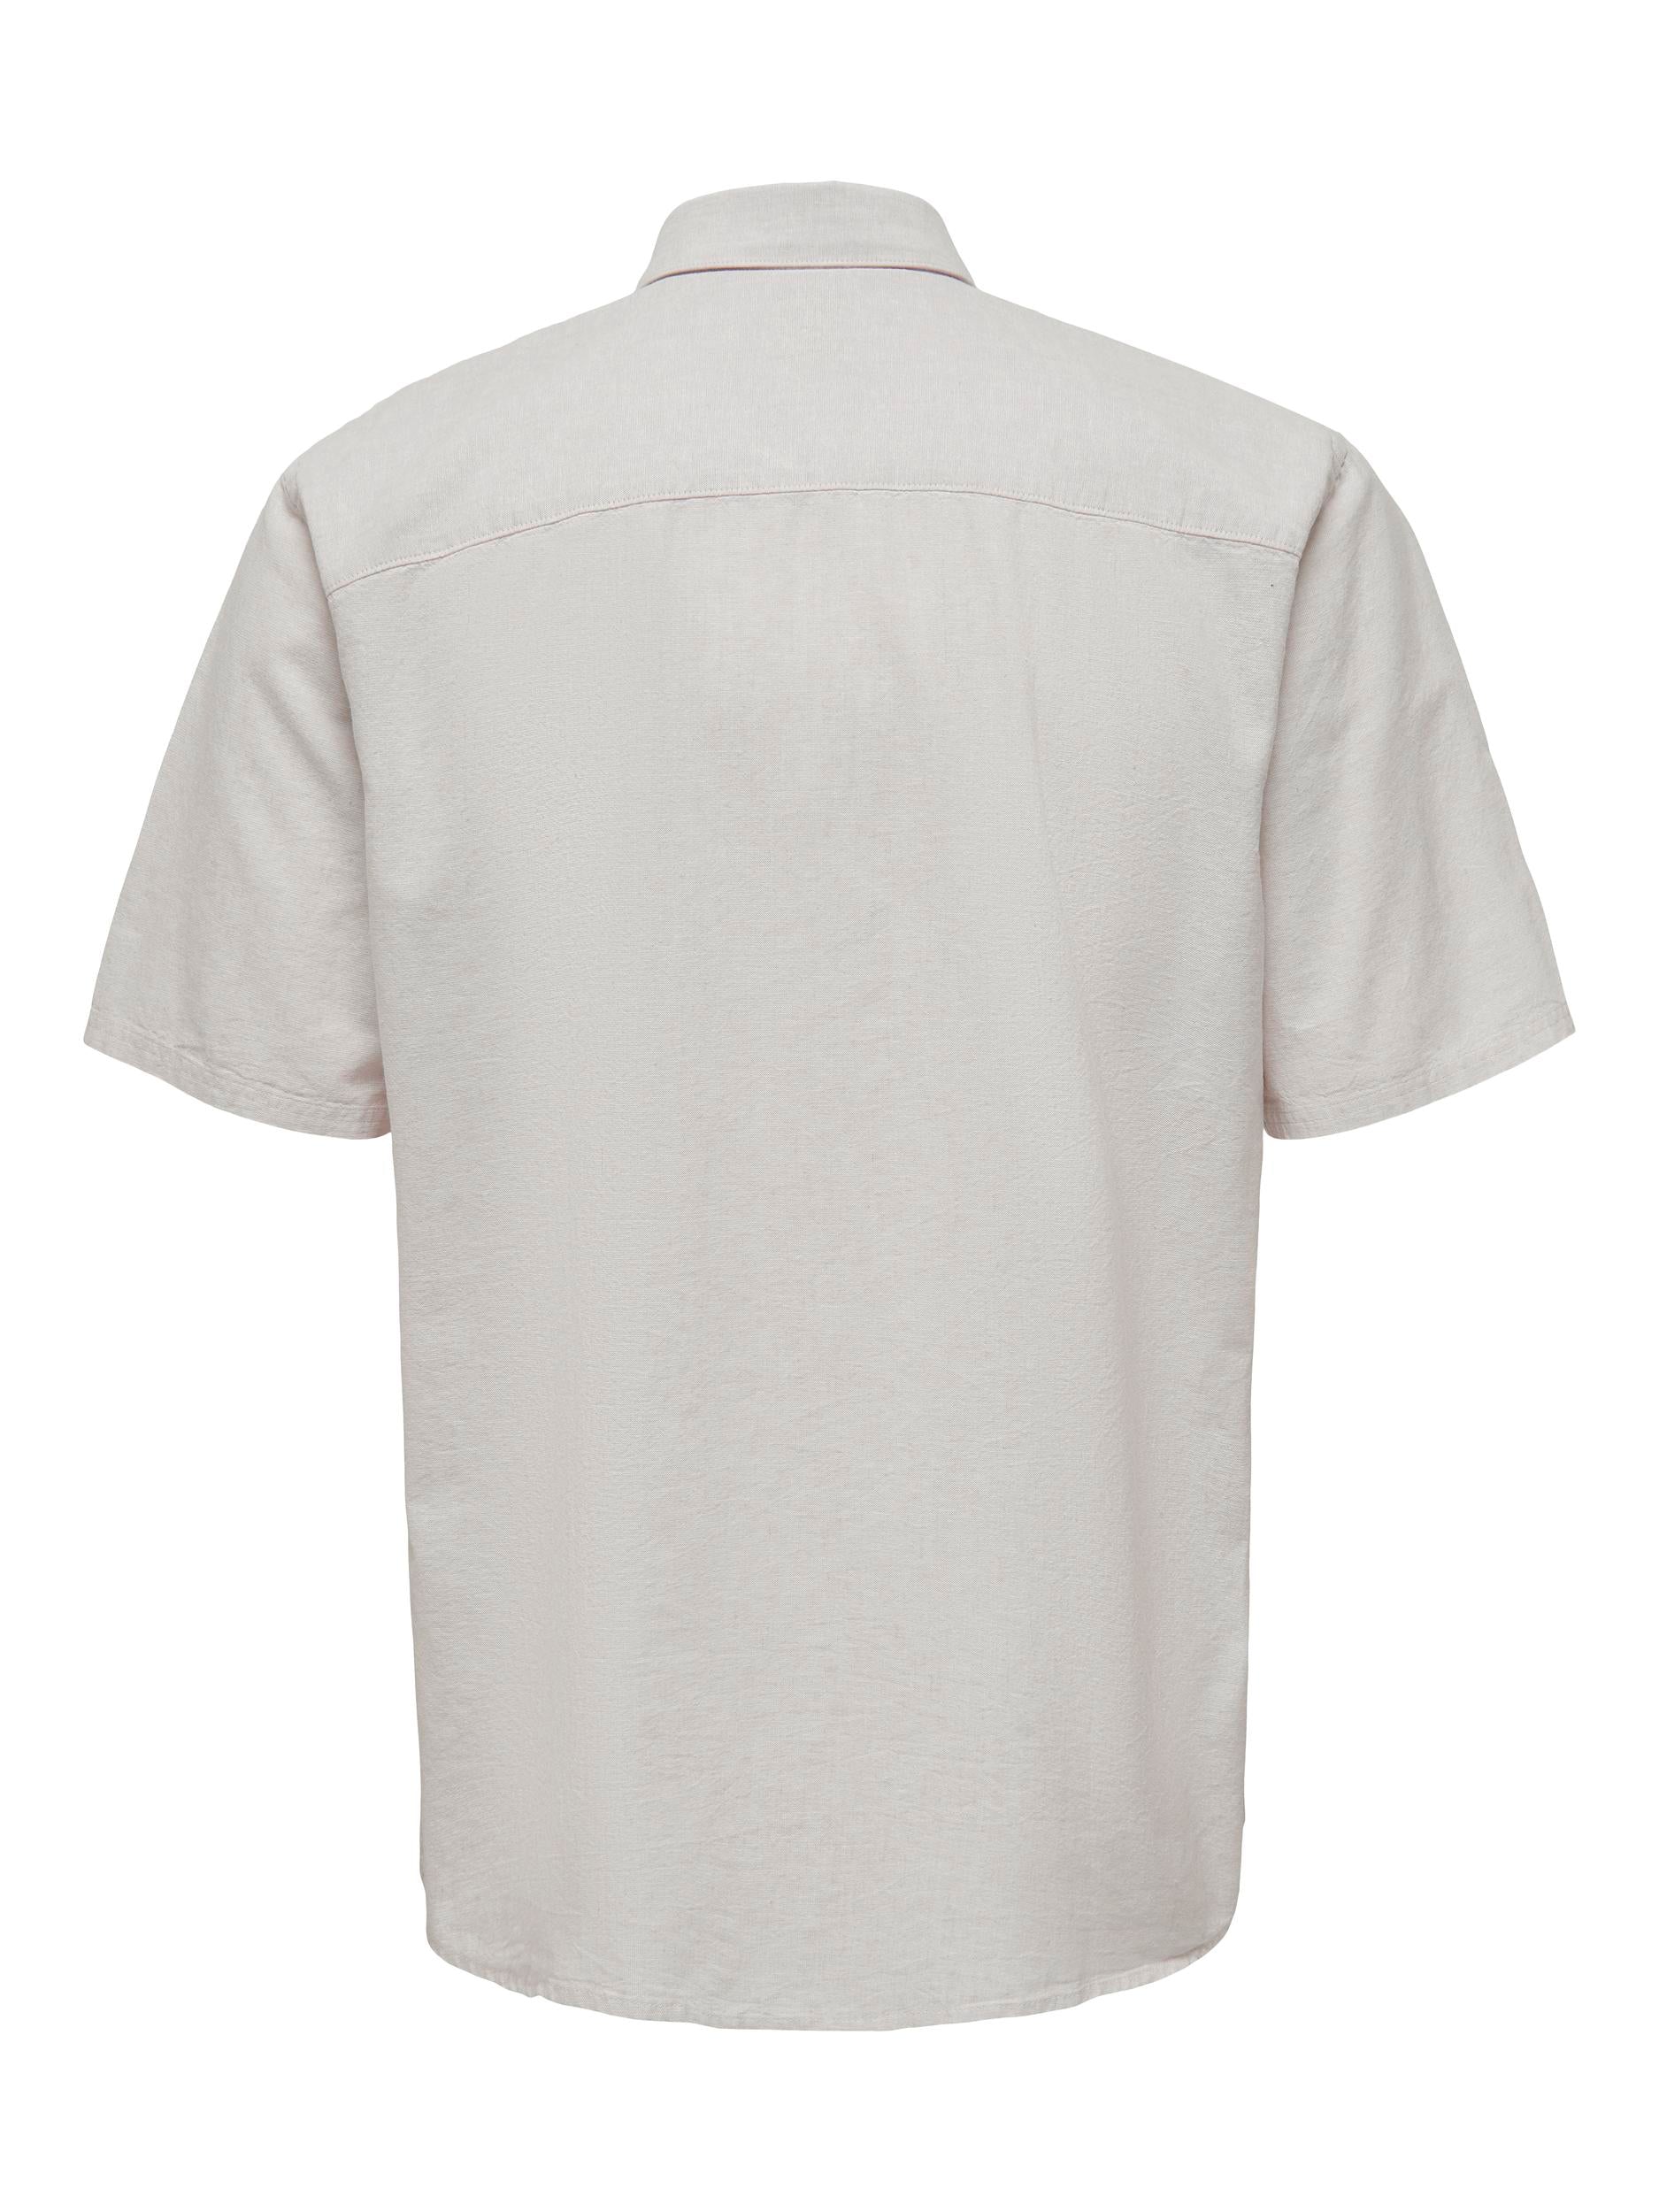 m tops - ONLY&SONS - Roan Linen Cotton Shirt - PLENTY